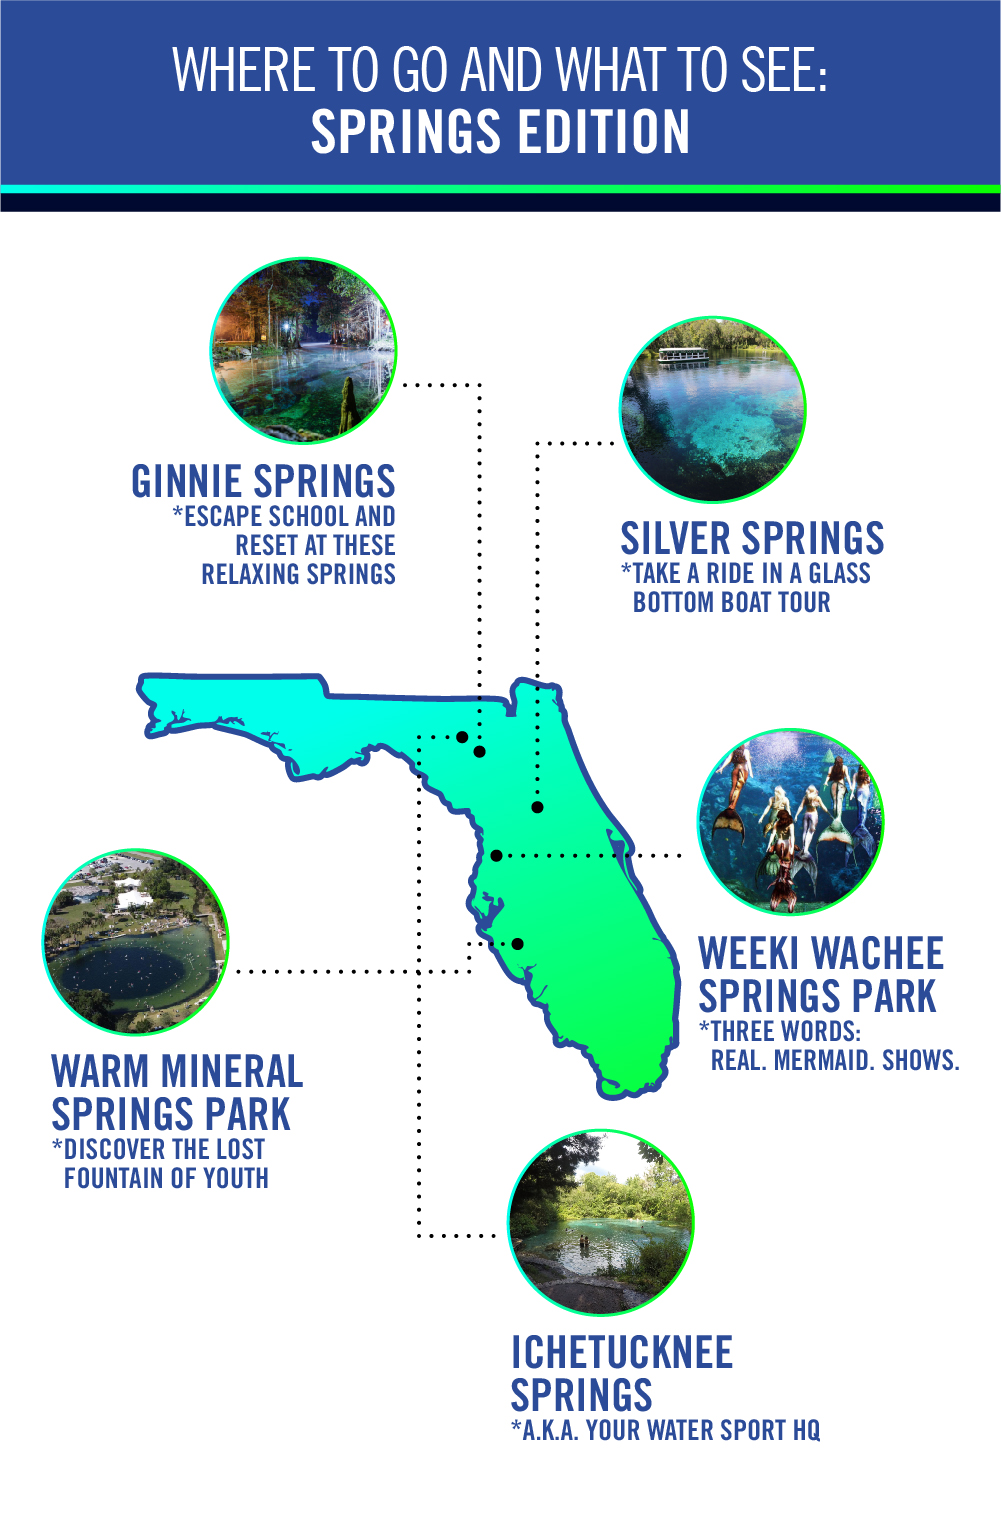 Top 5 Florida's Natural Springs